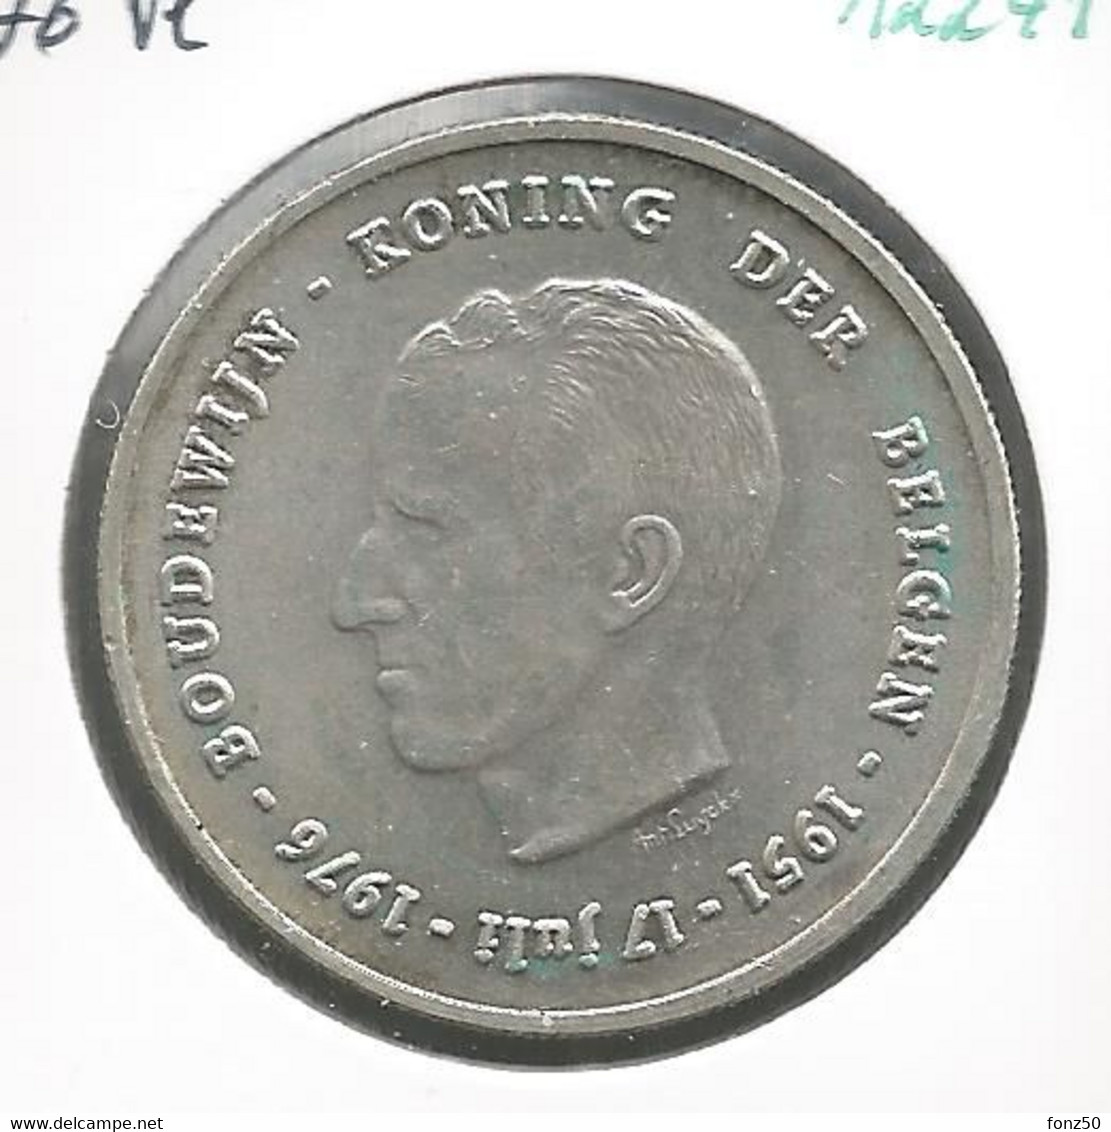 BOUDEWIJN * 250 Frank 1976 Vlaams * Nr 12241 - 250 Francs